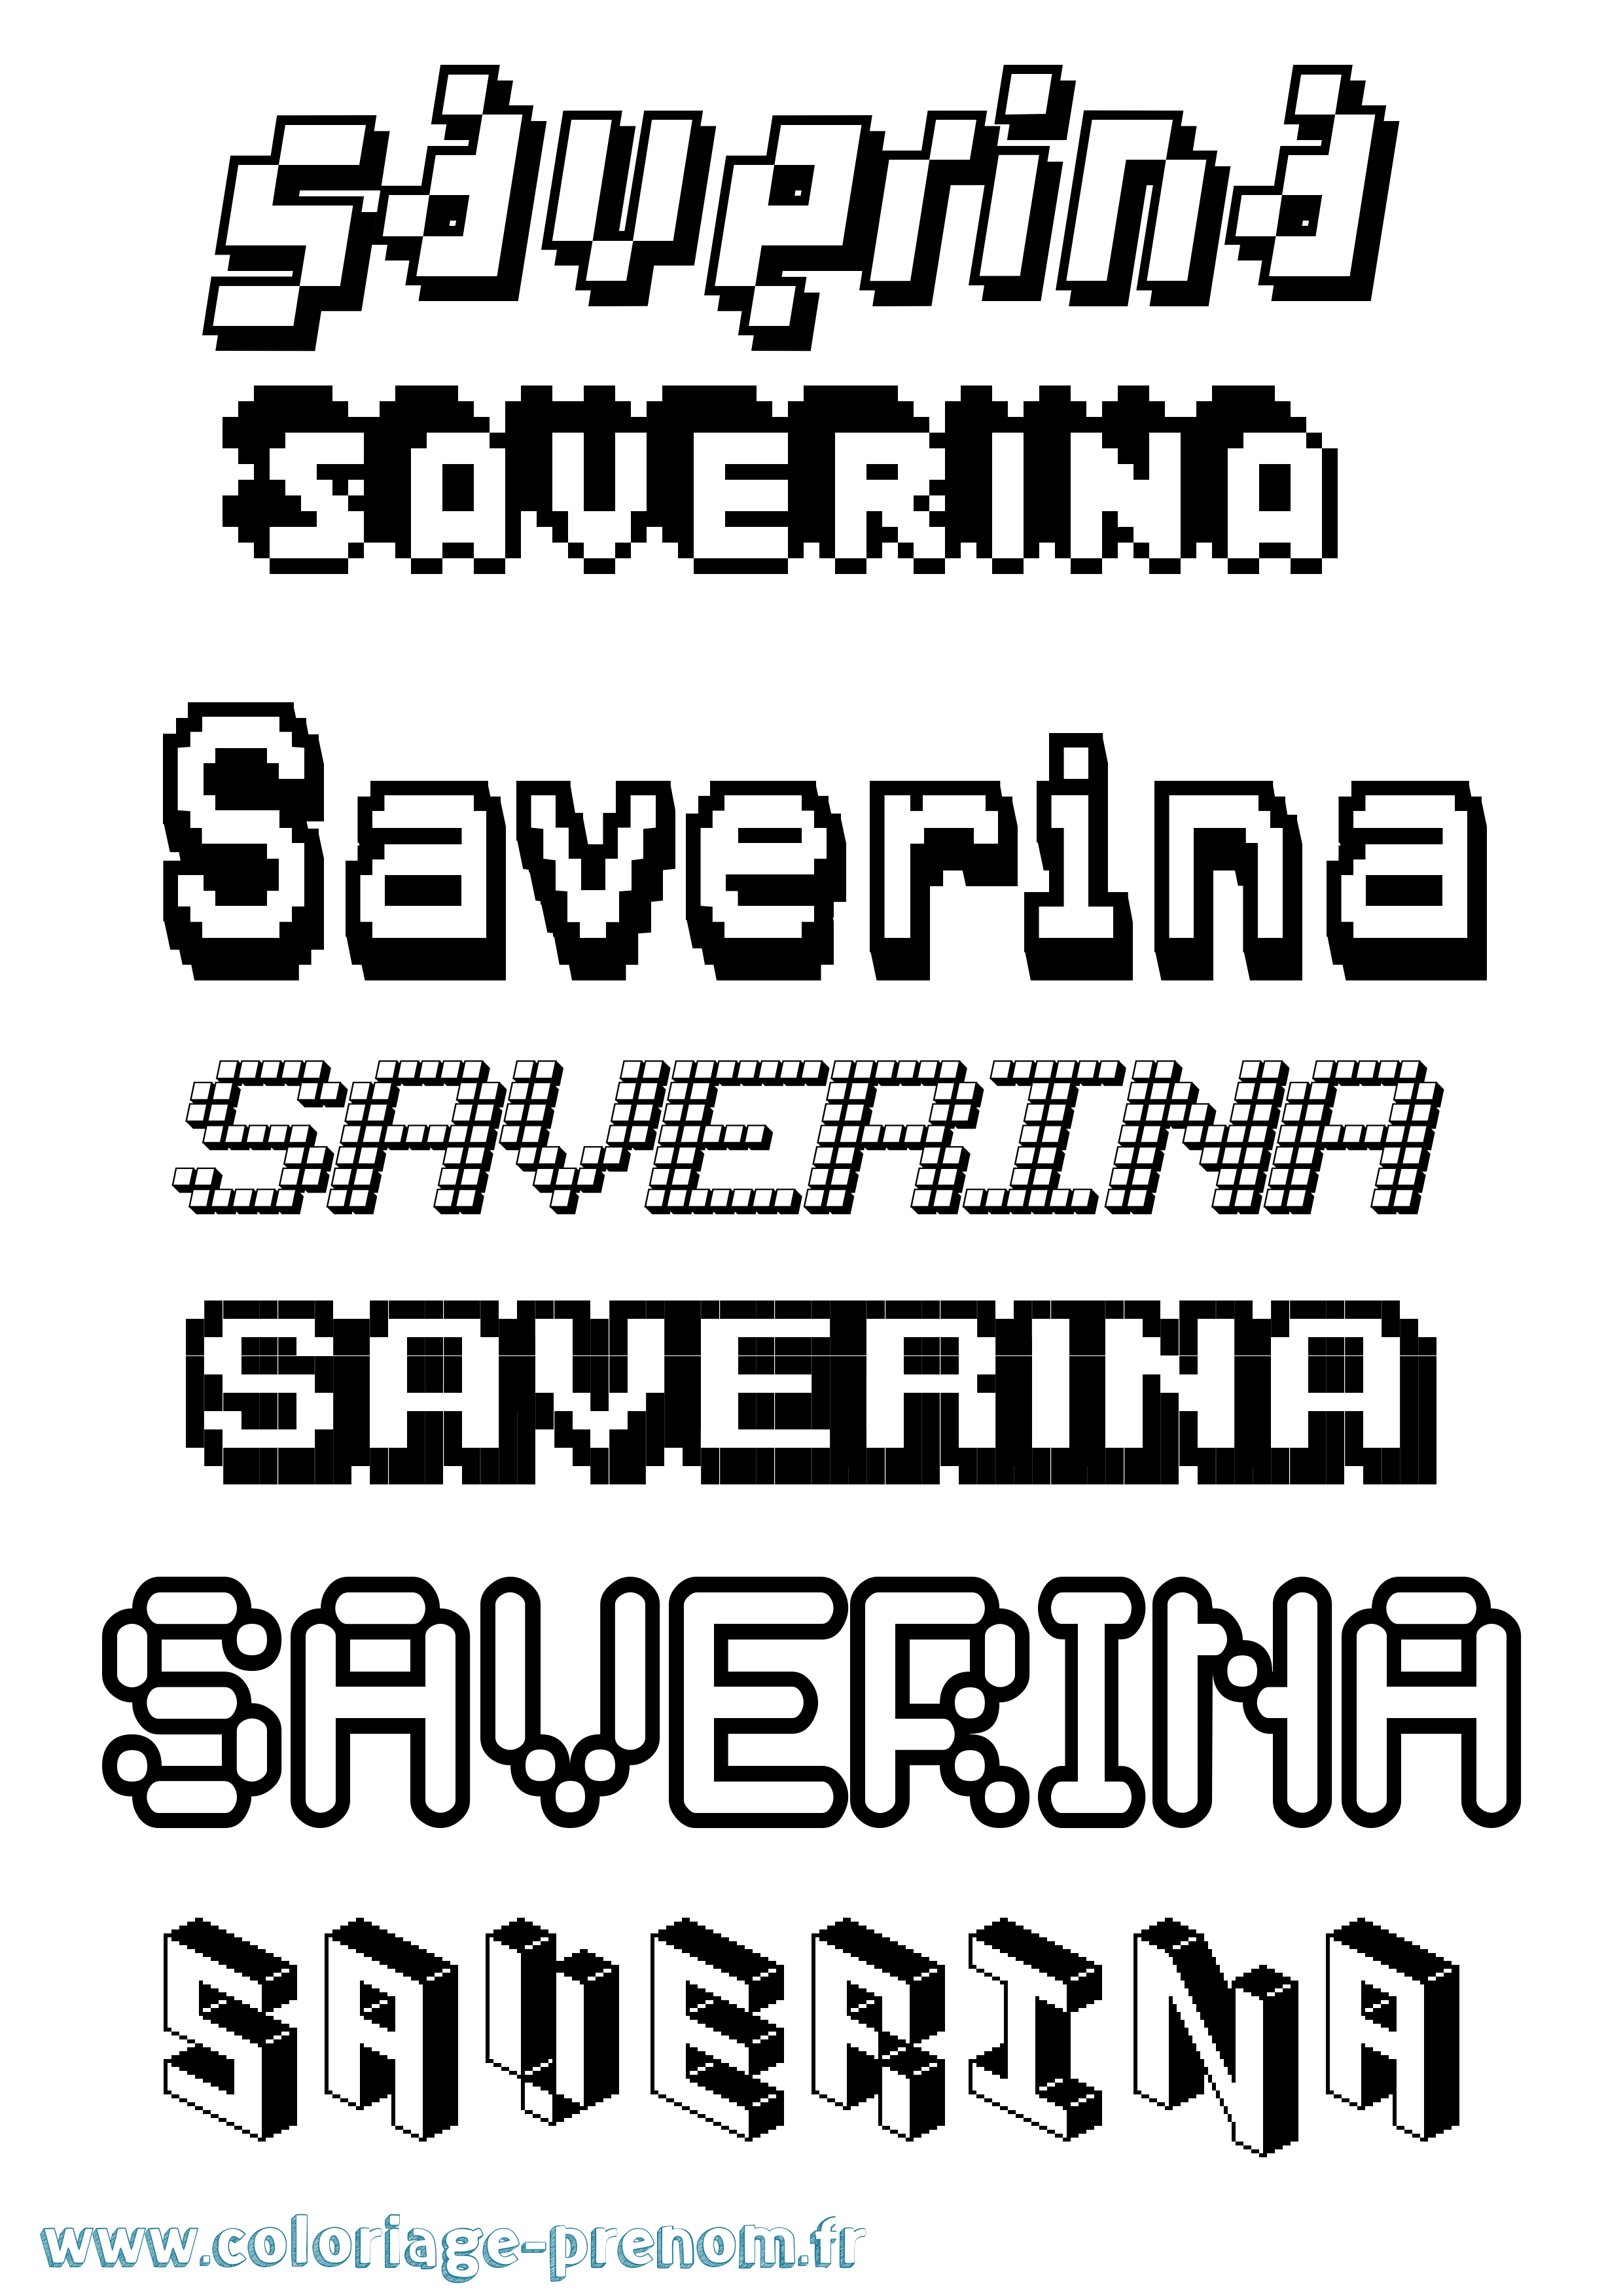 Coloriage prénom Saverina Pixel